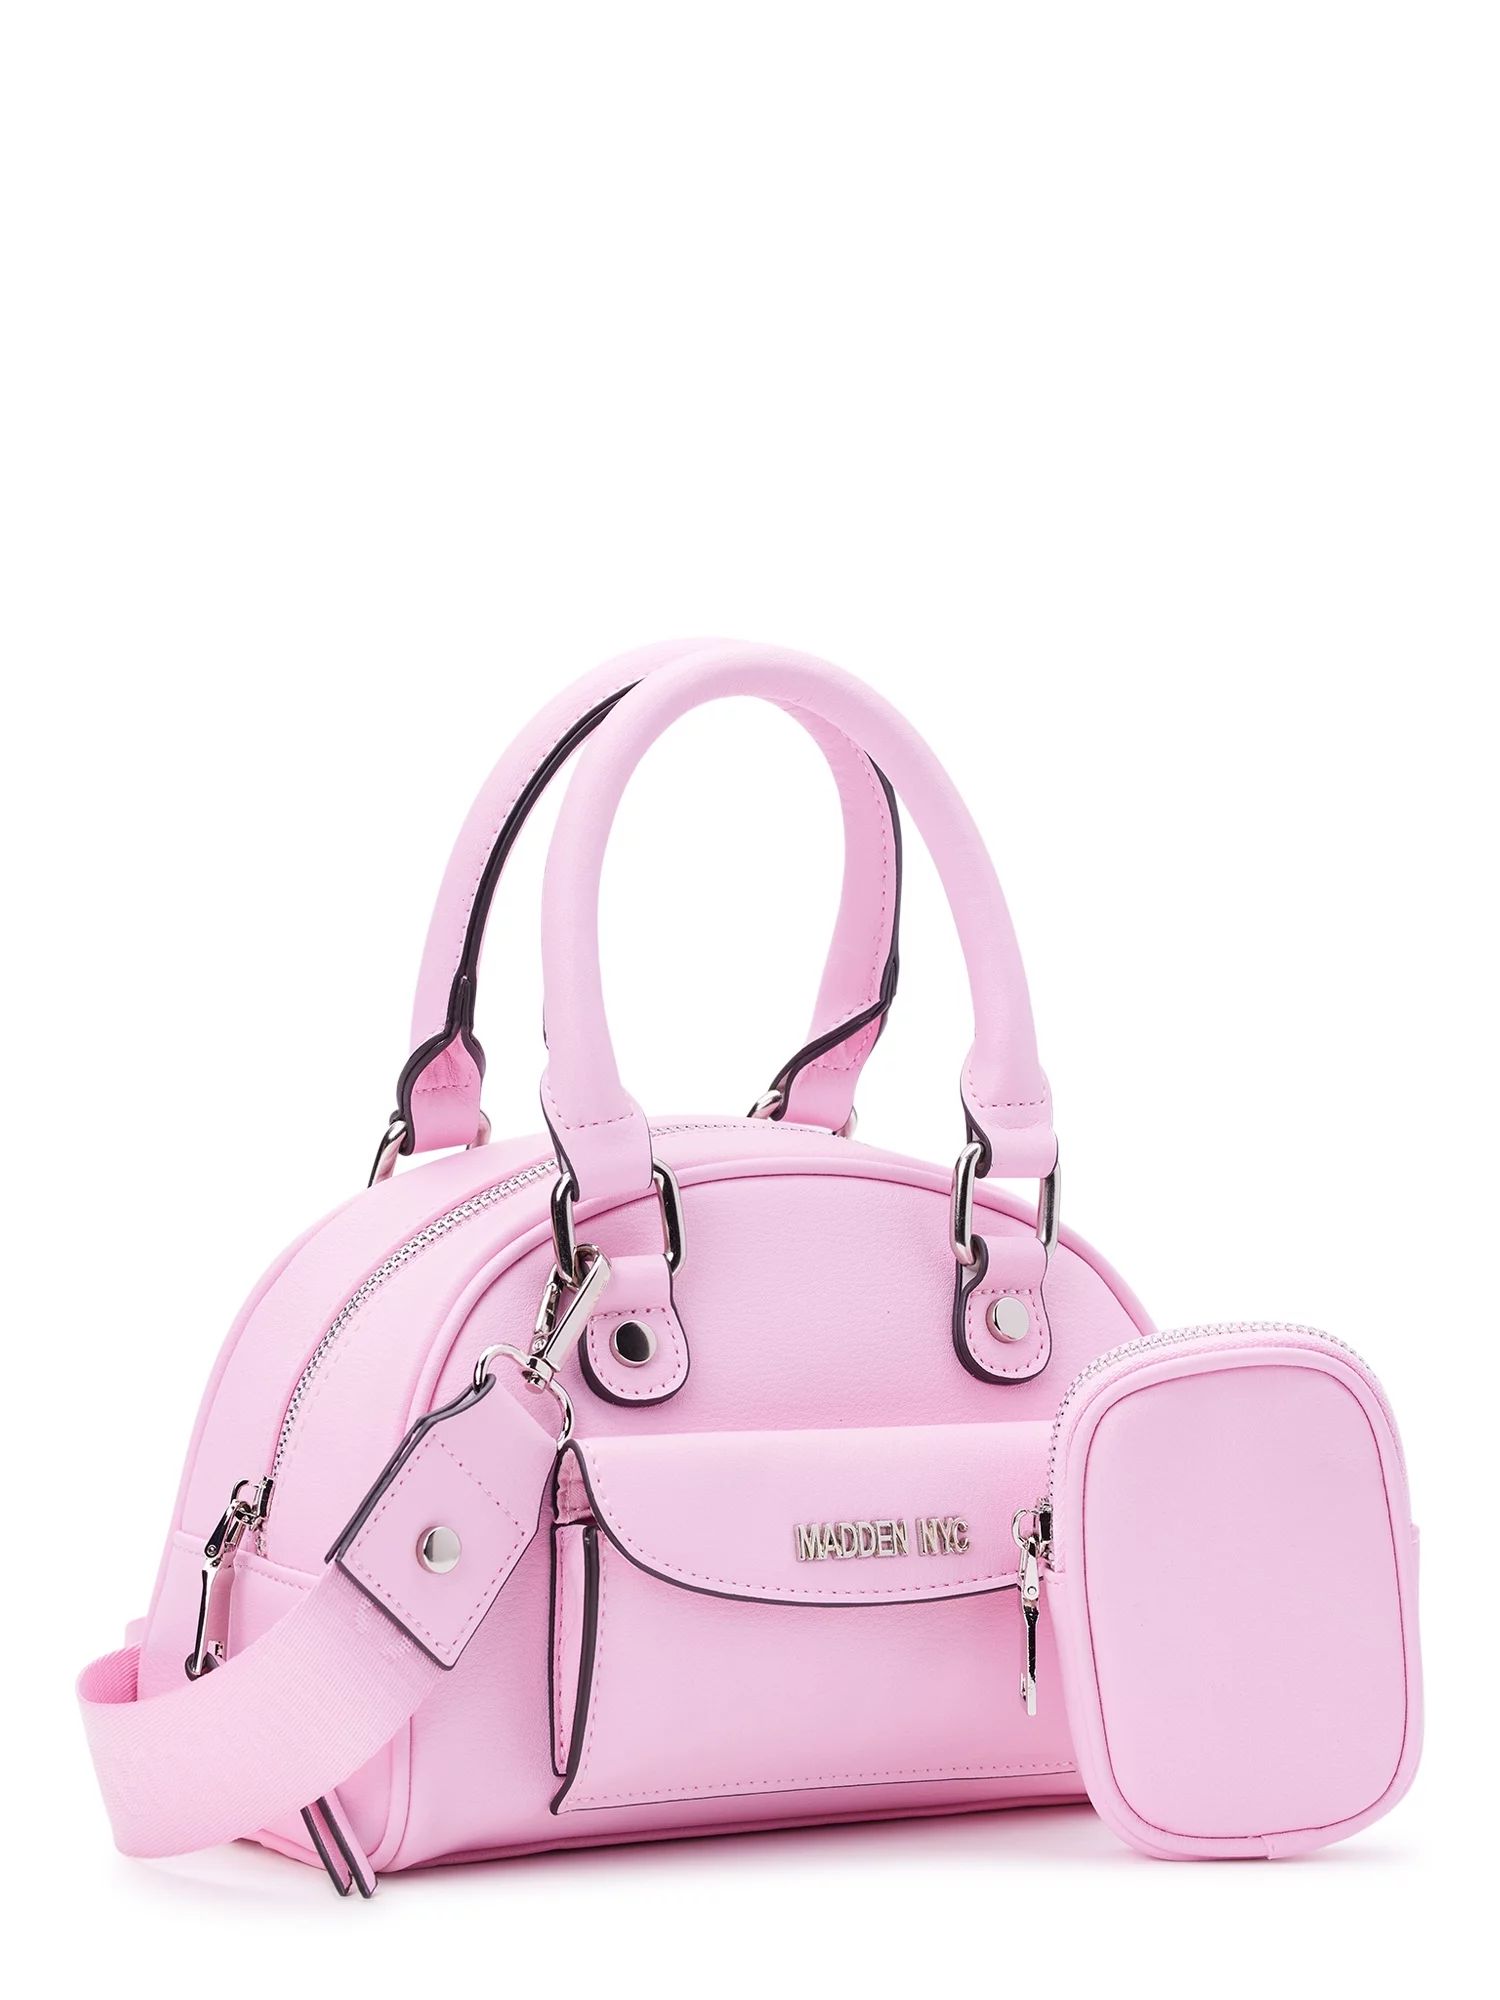 Madden NYC Women's Bowler Handbag with Pocket, Light Pink | Walmart (US)